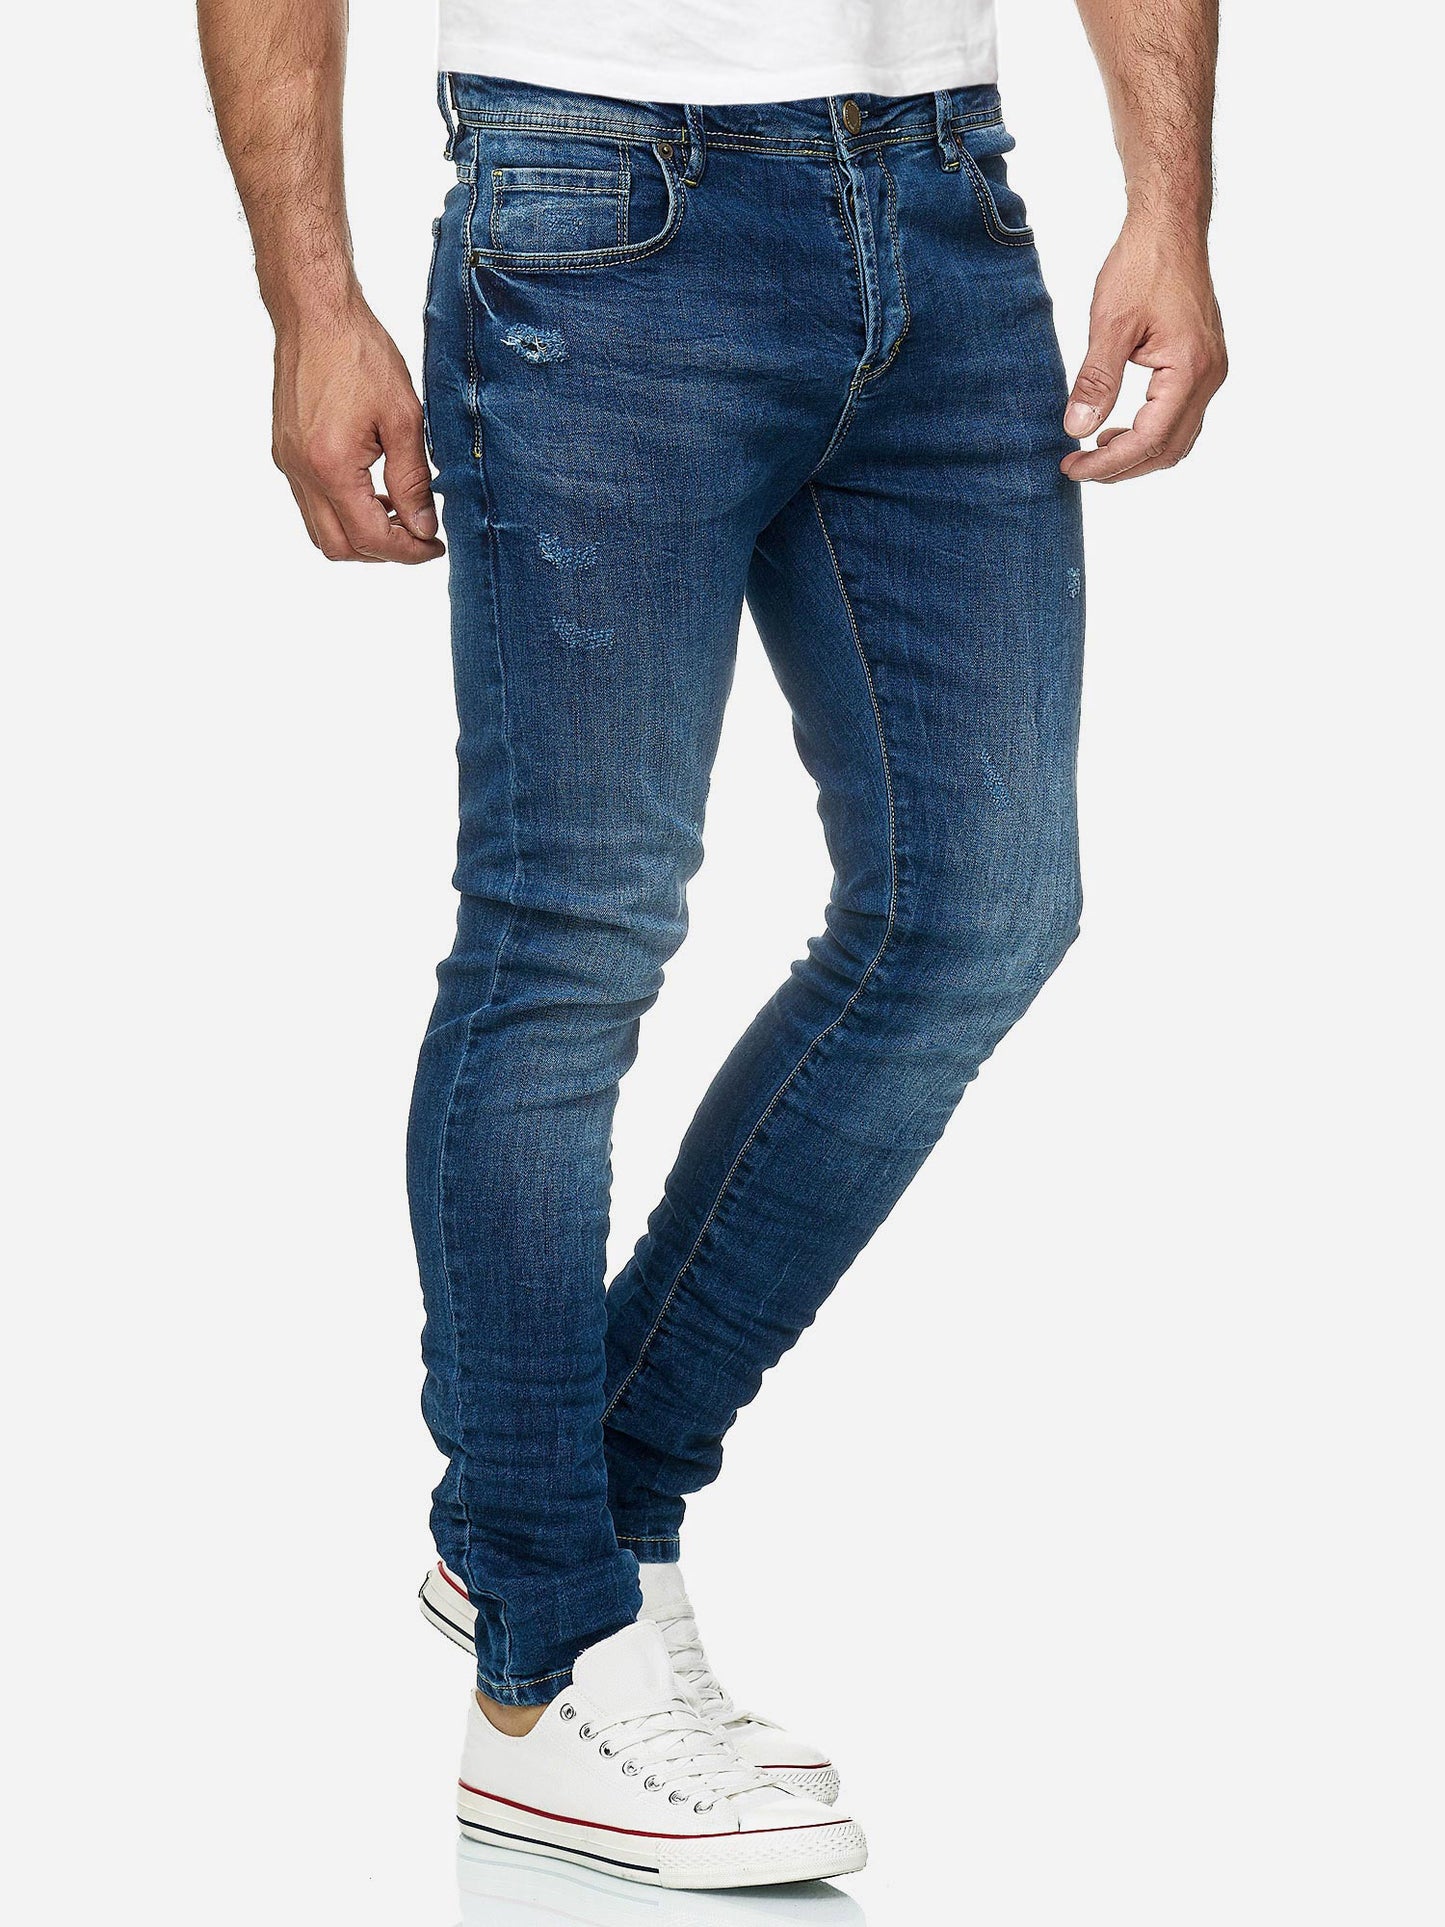 Tazzio Herren Jeans Skinny Fit 19534